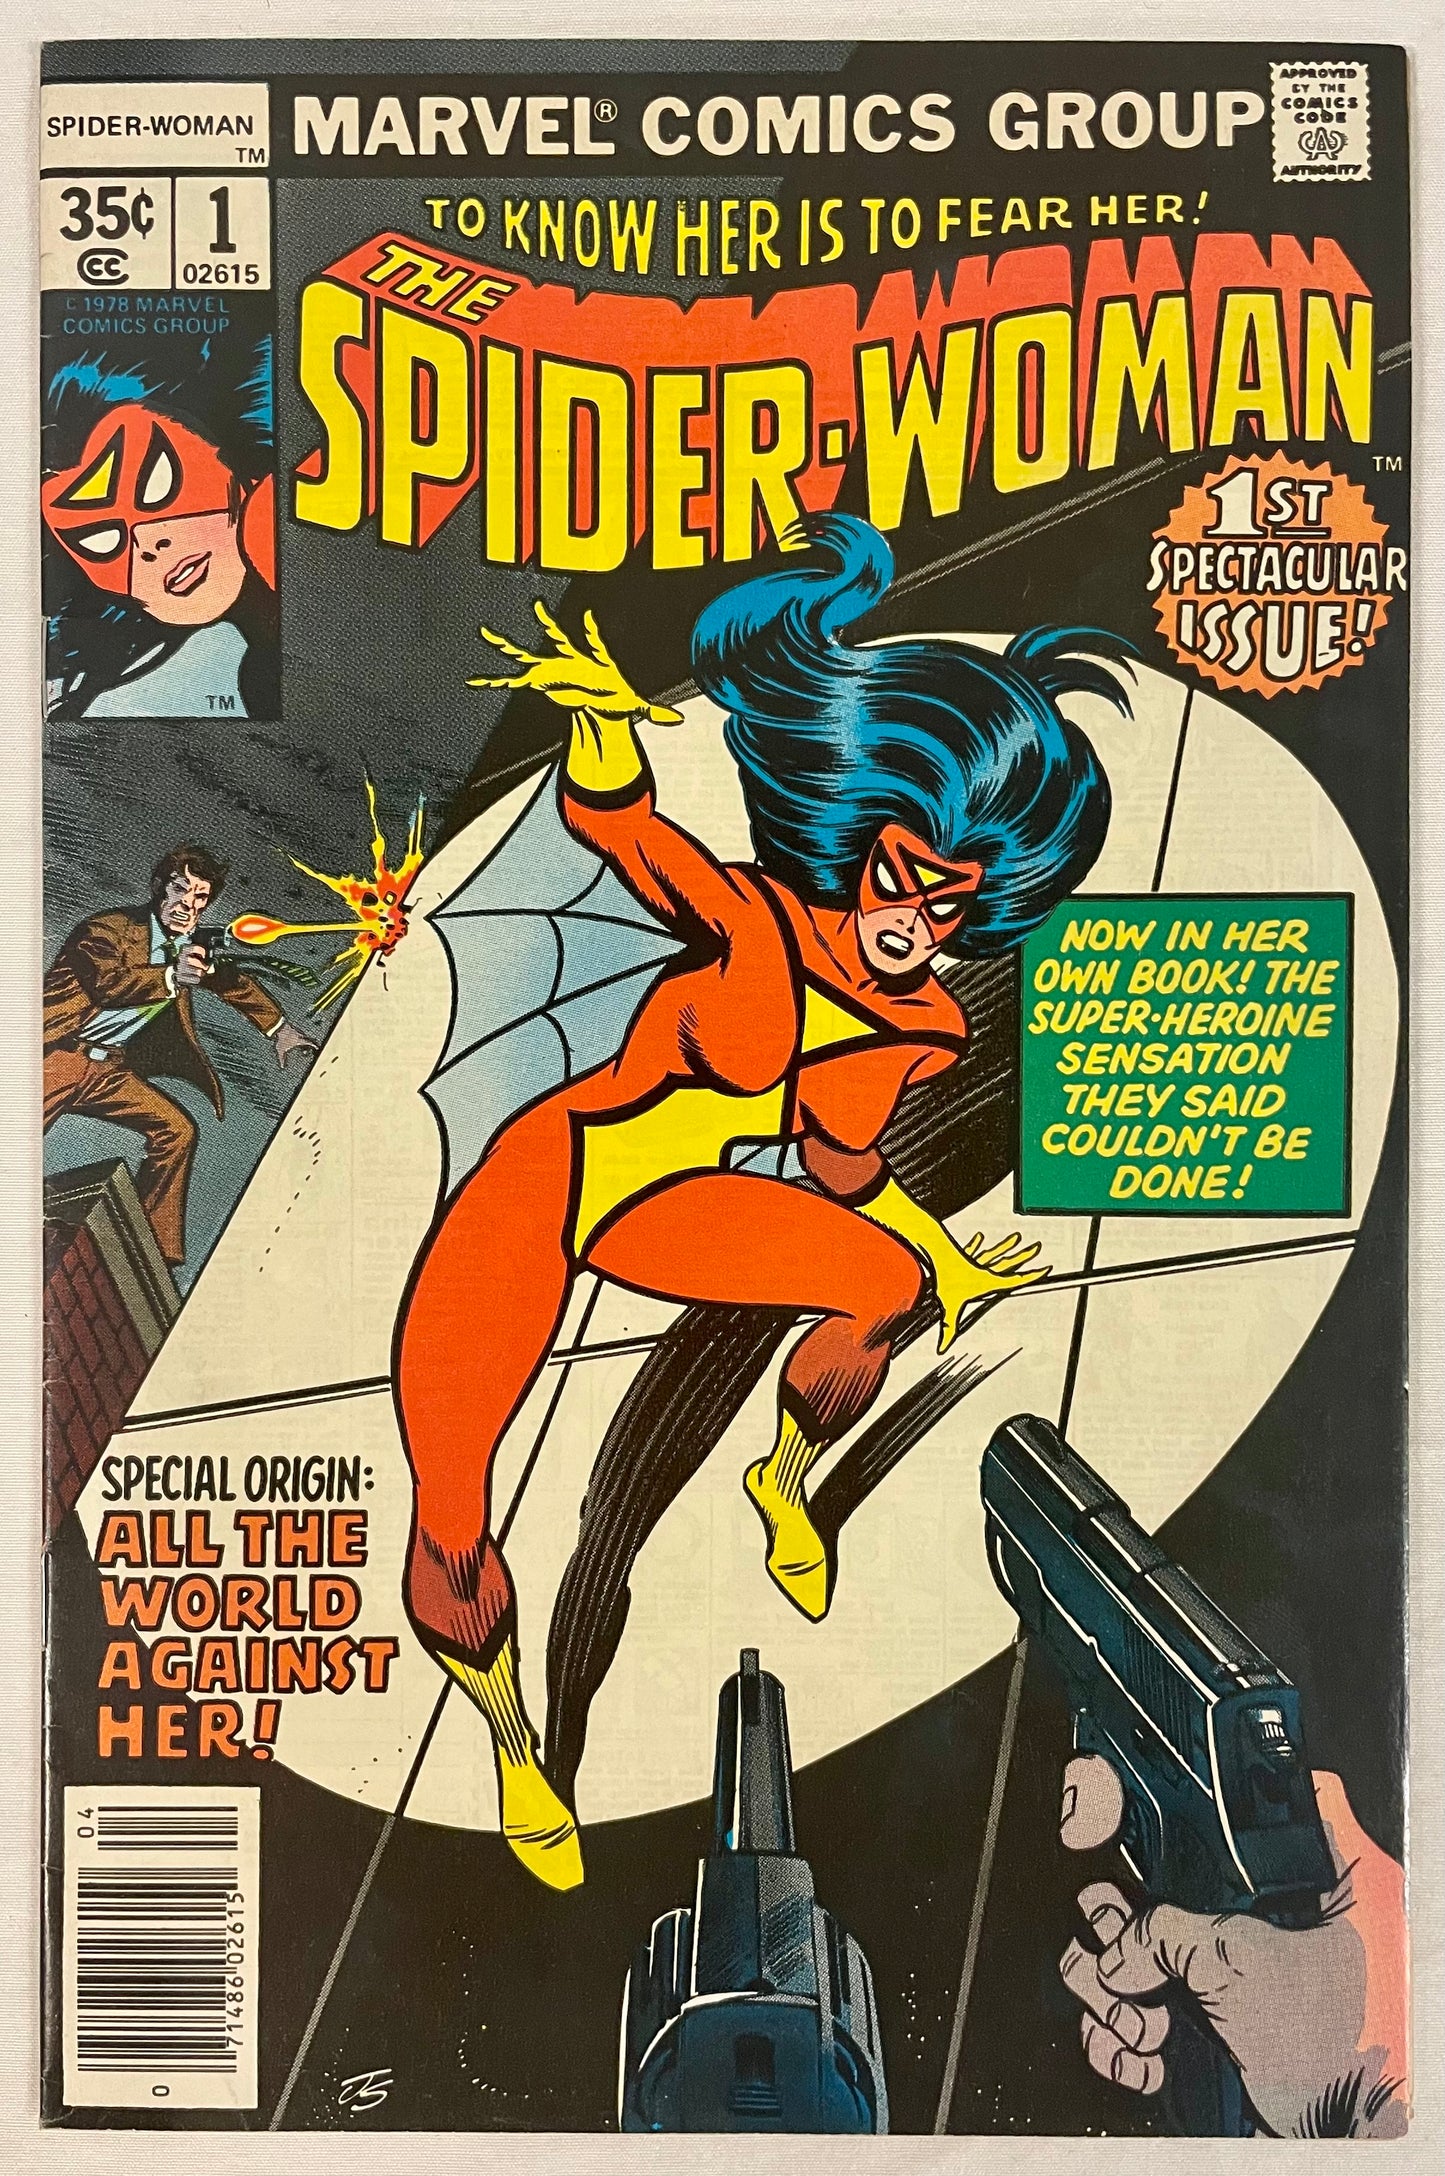 Marvel Comics Spider-Woman #1